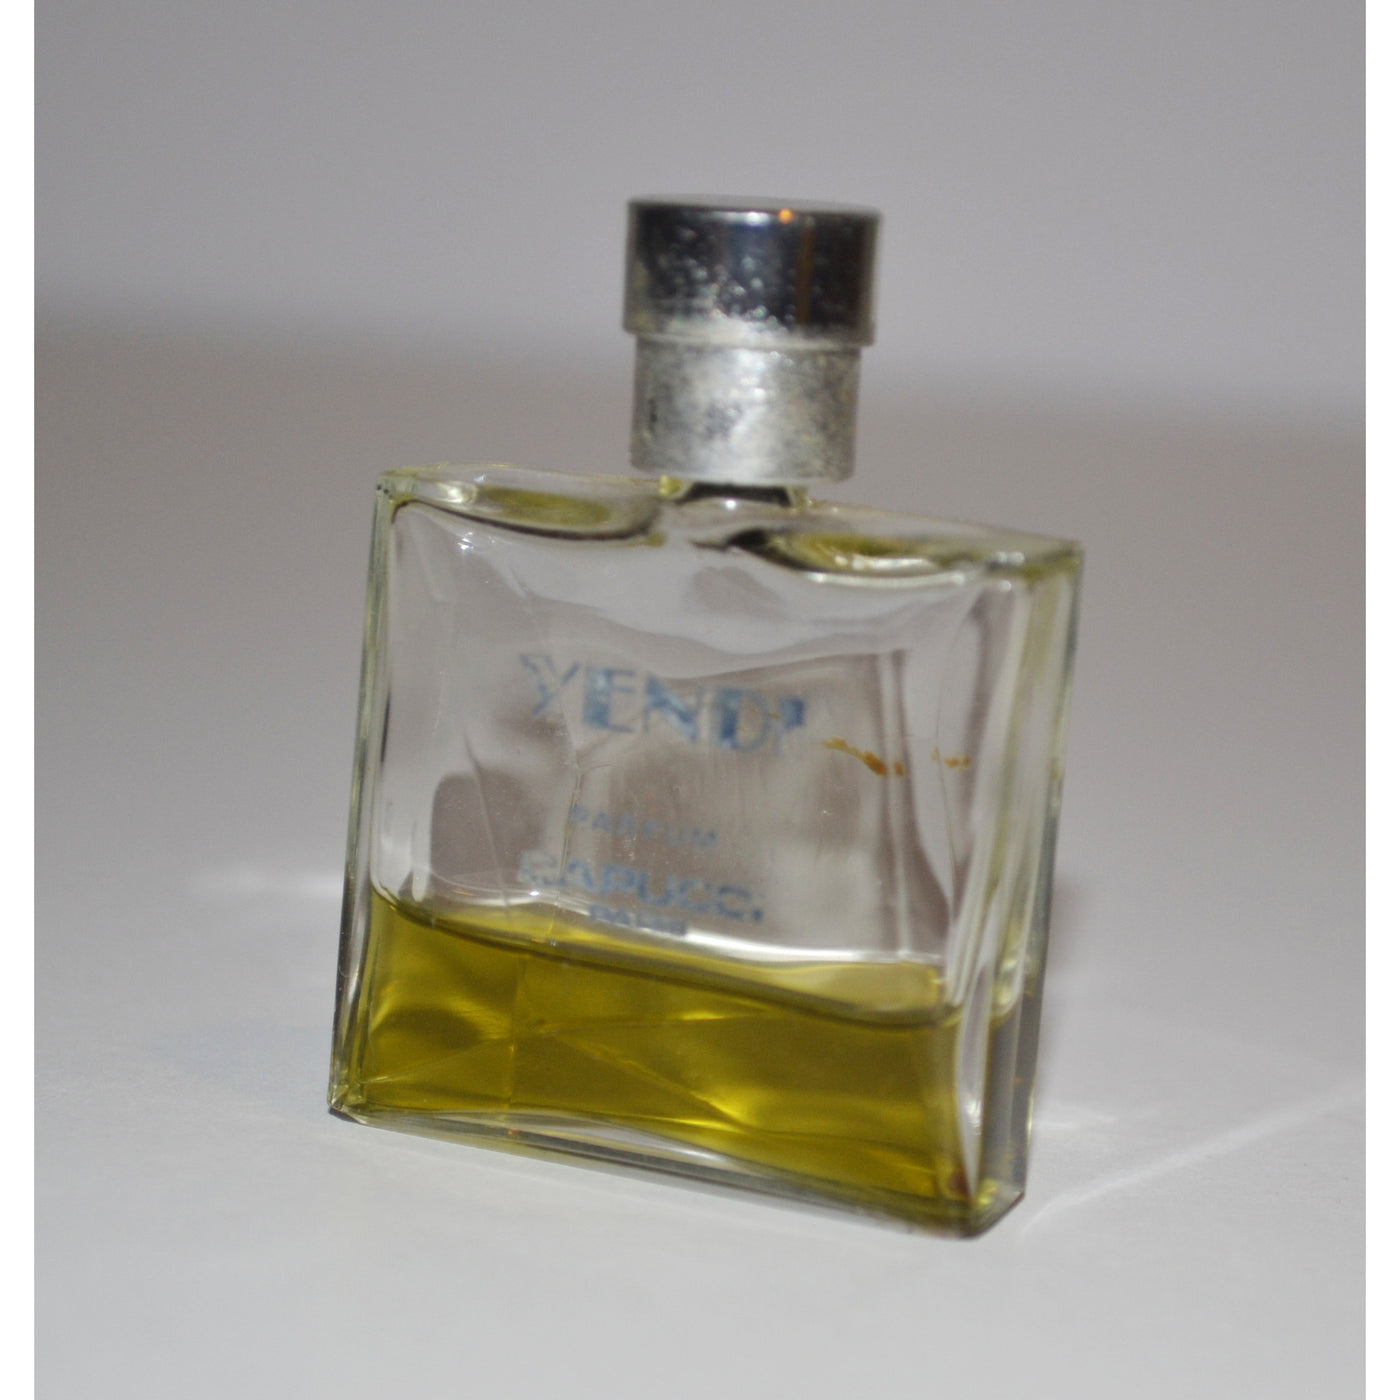 Vintage Yendi Parfum Mini By Capucci